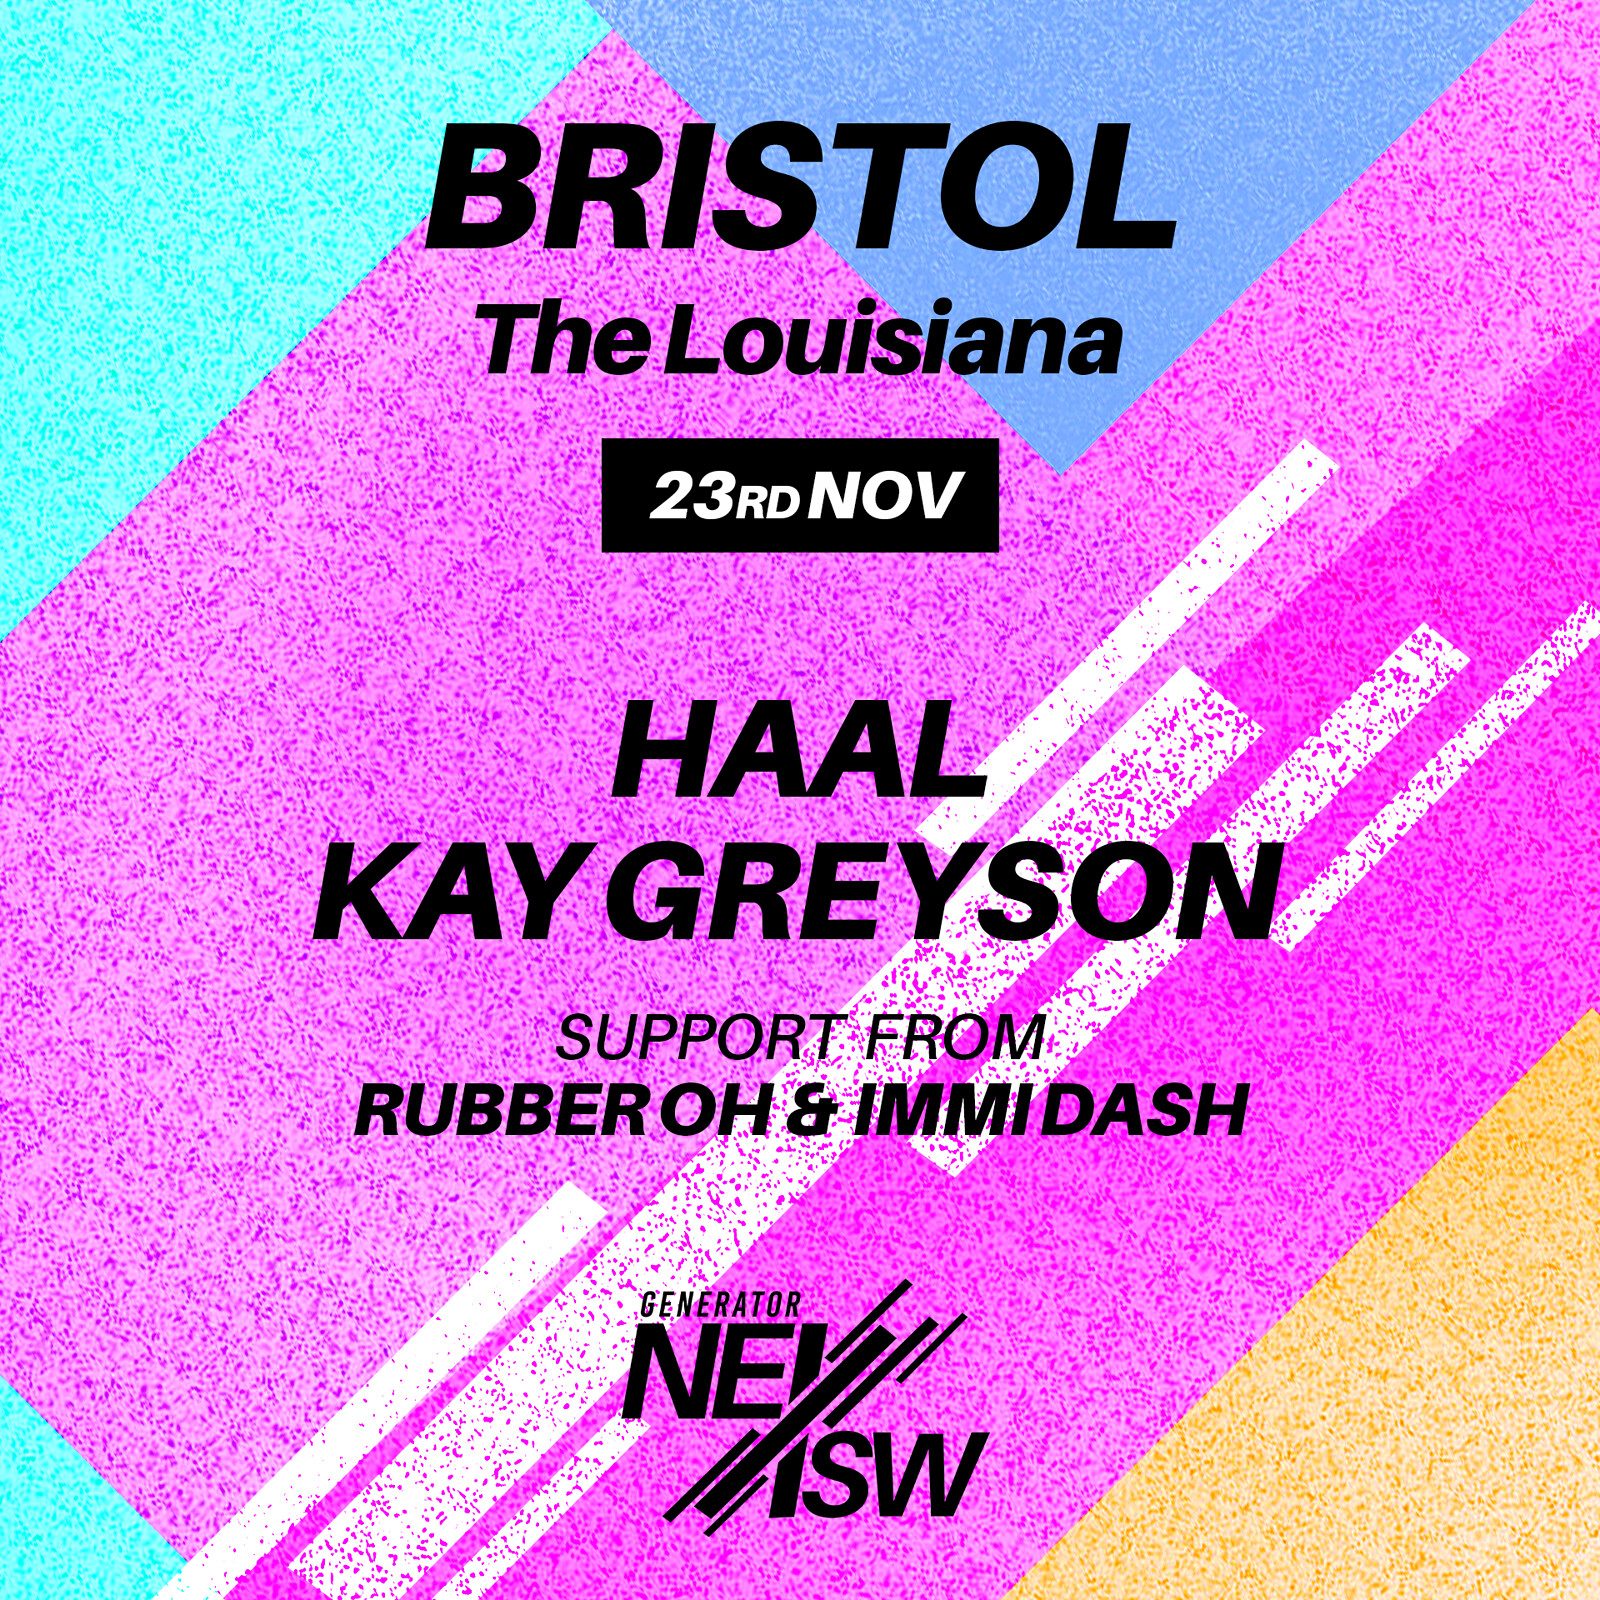 Haal + Kay Greyson + Immi Dash + Rubber Oh at The Louisiana